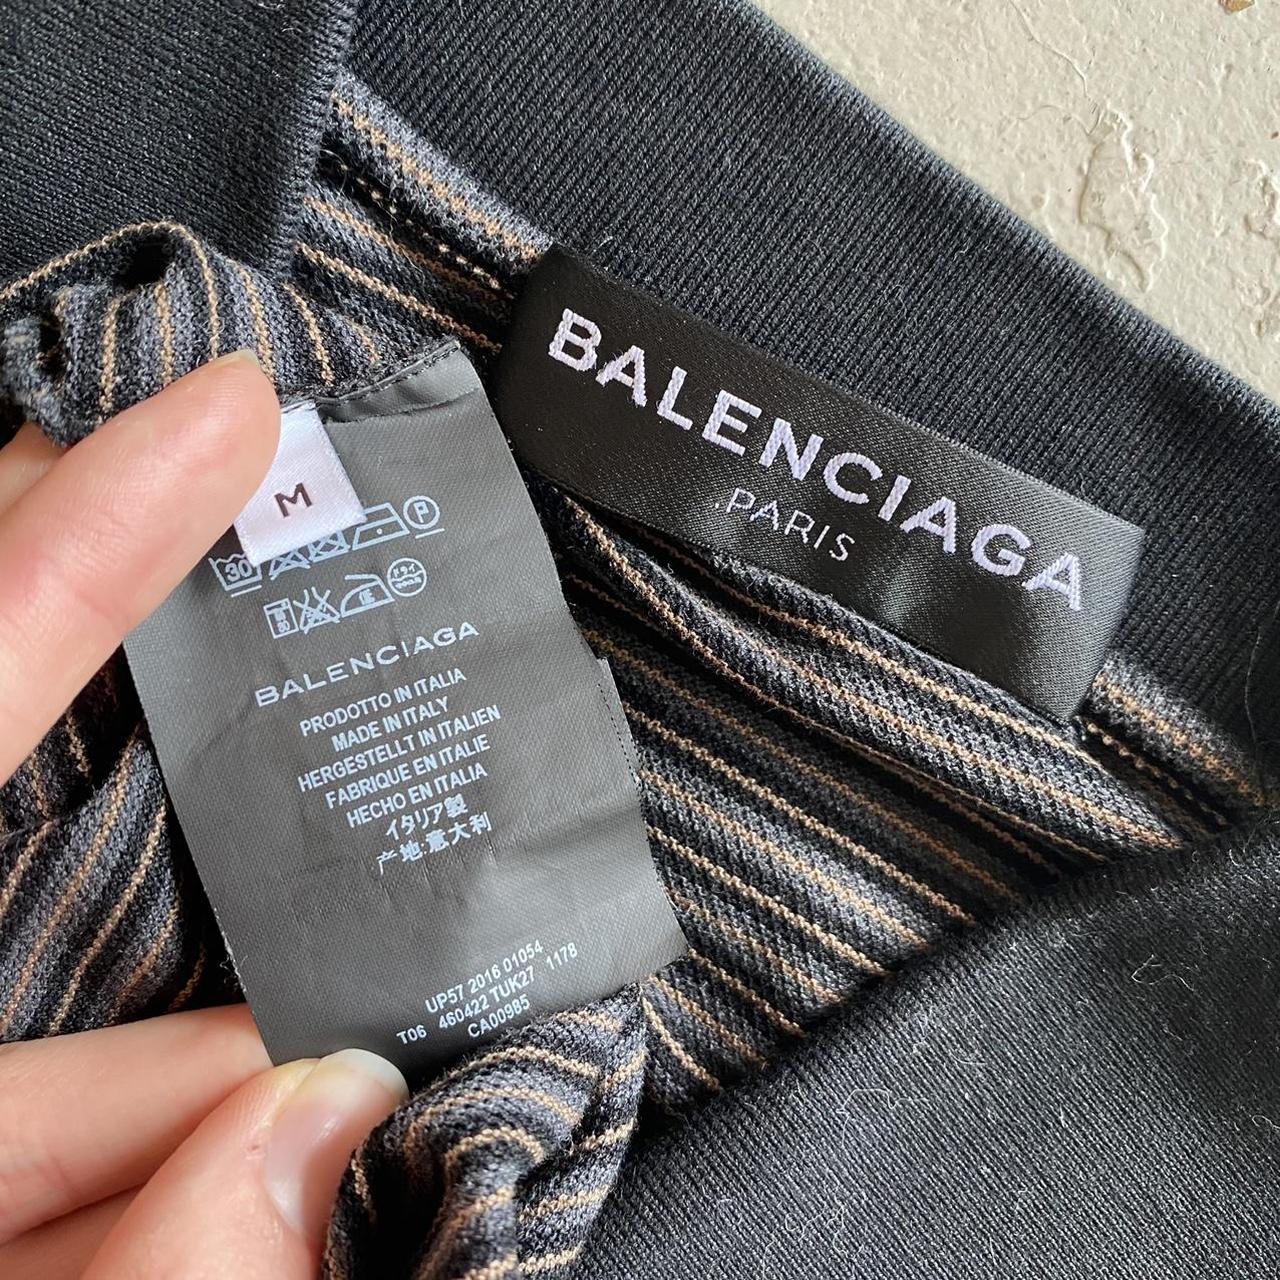 Product Image 2 - Super cute 2016 Balenciaga striped